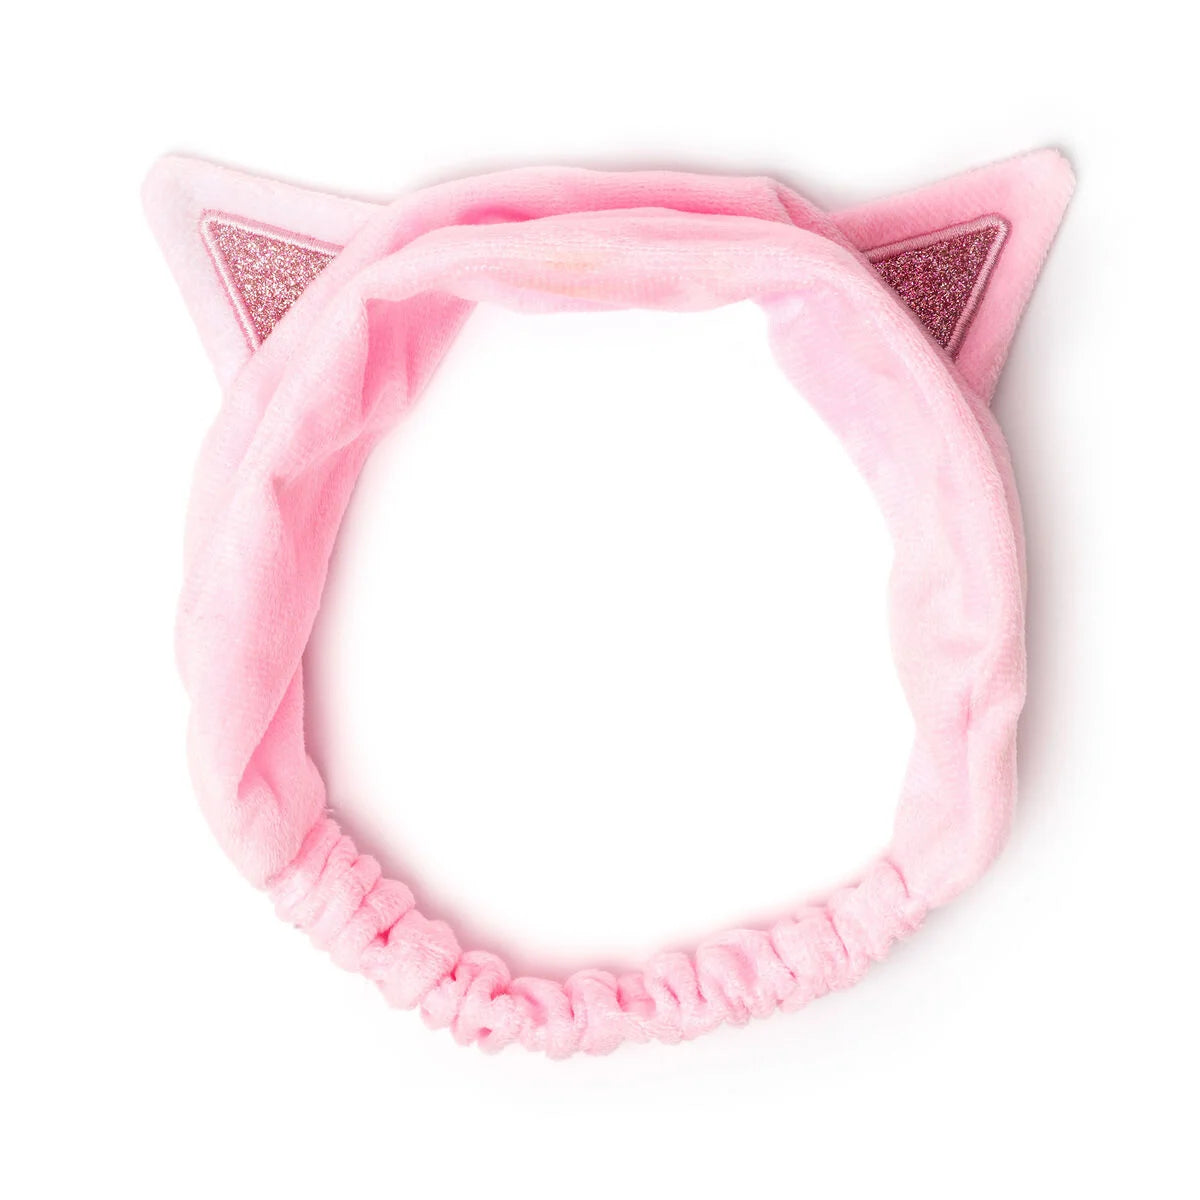 Fabulous Gifts Beauty Legami Headband Kitty by Weirs of Baggot Street